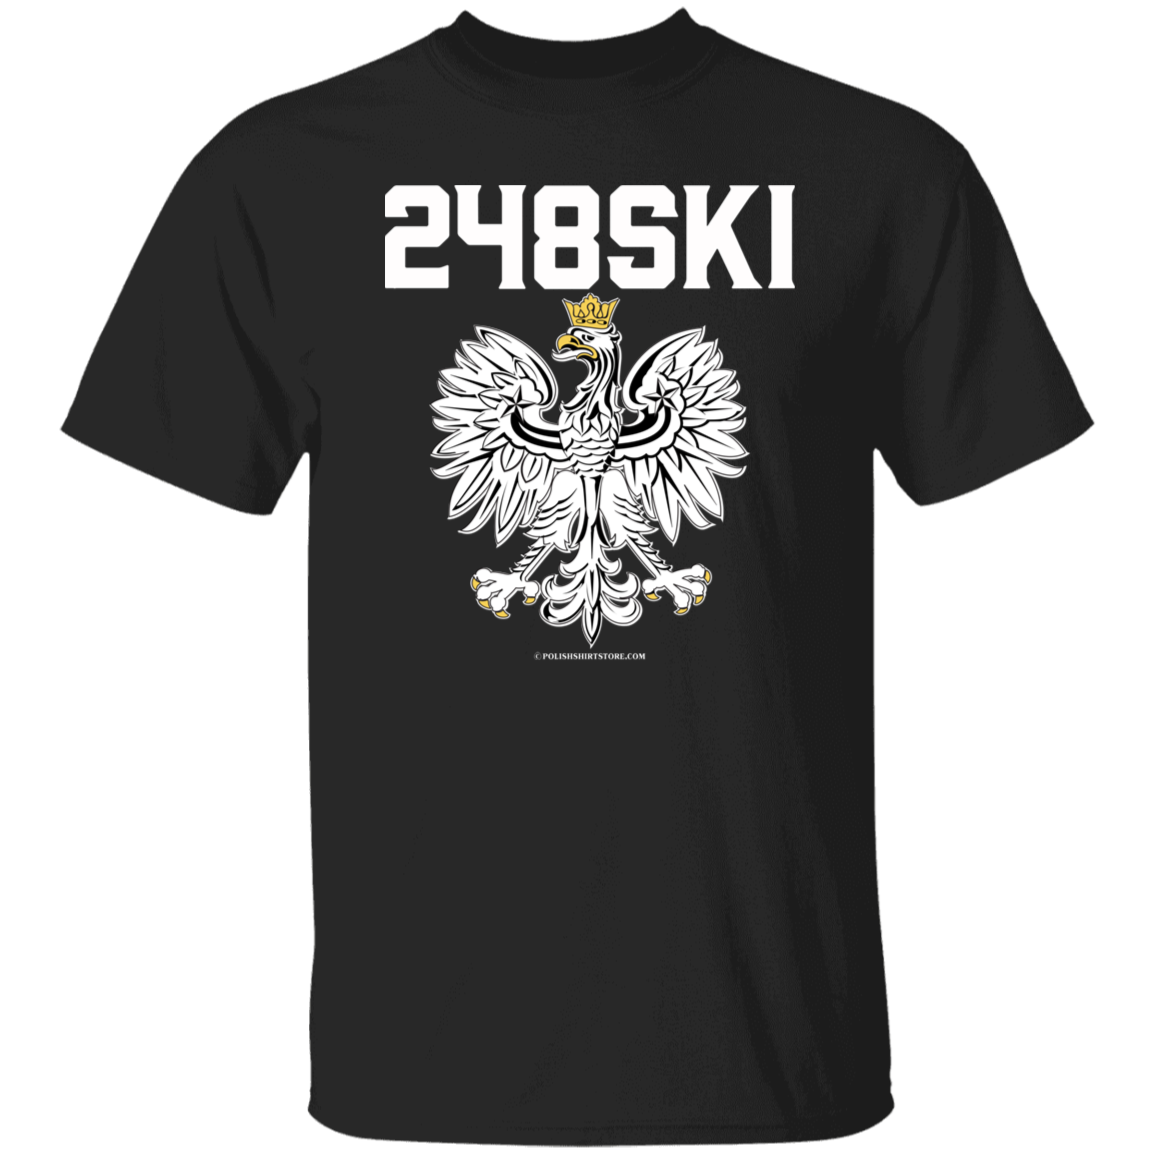 248SKI Apparel CustomCat G500 5.3 oz. T-Shirt Black S